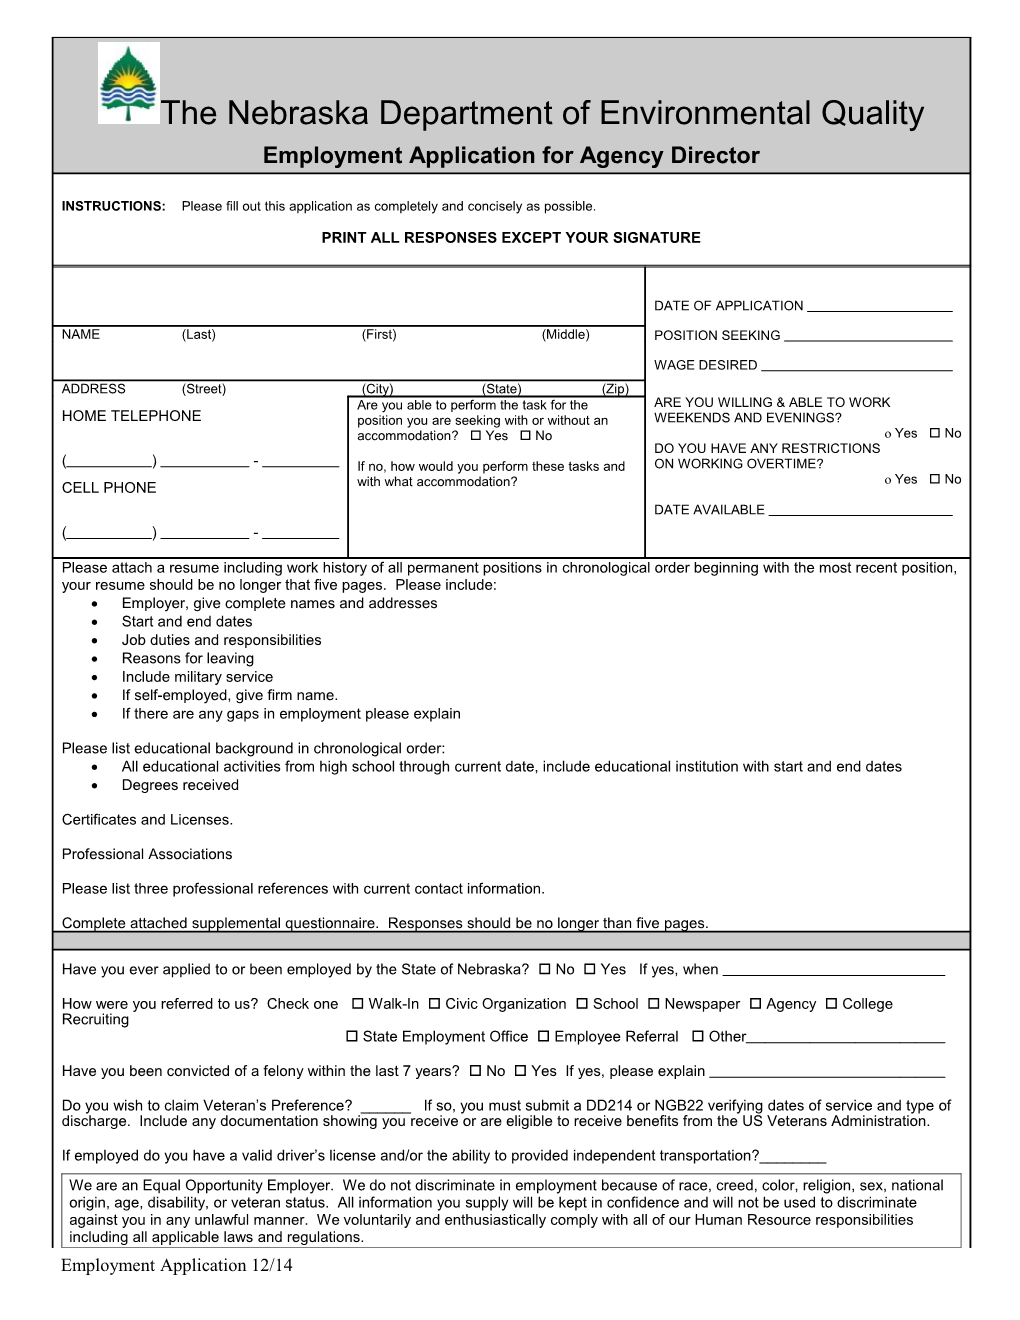 Employment Application 12/14